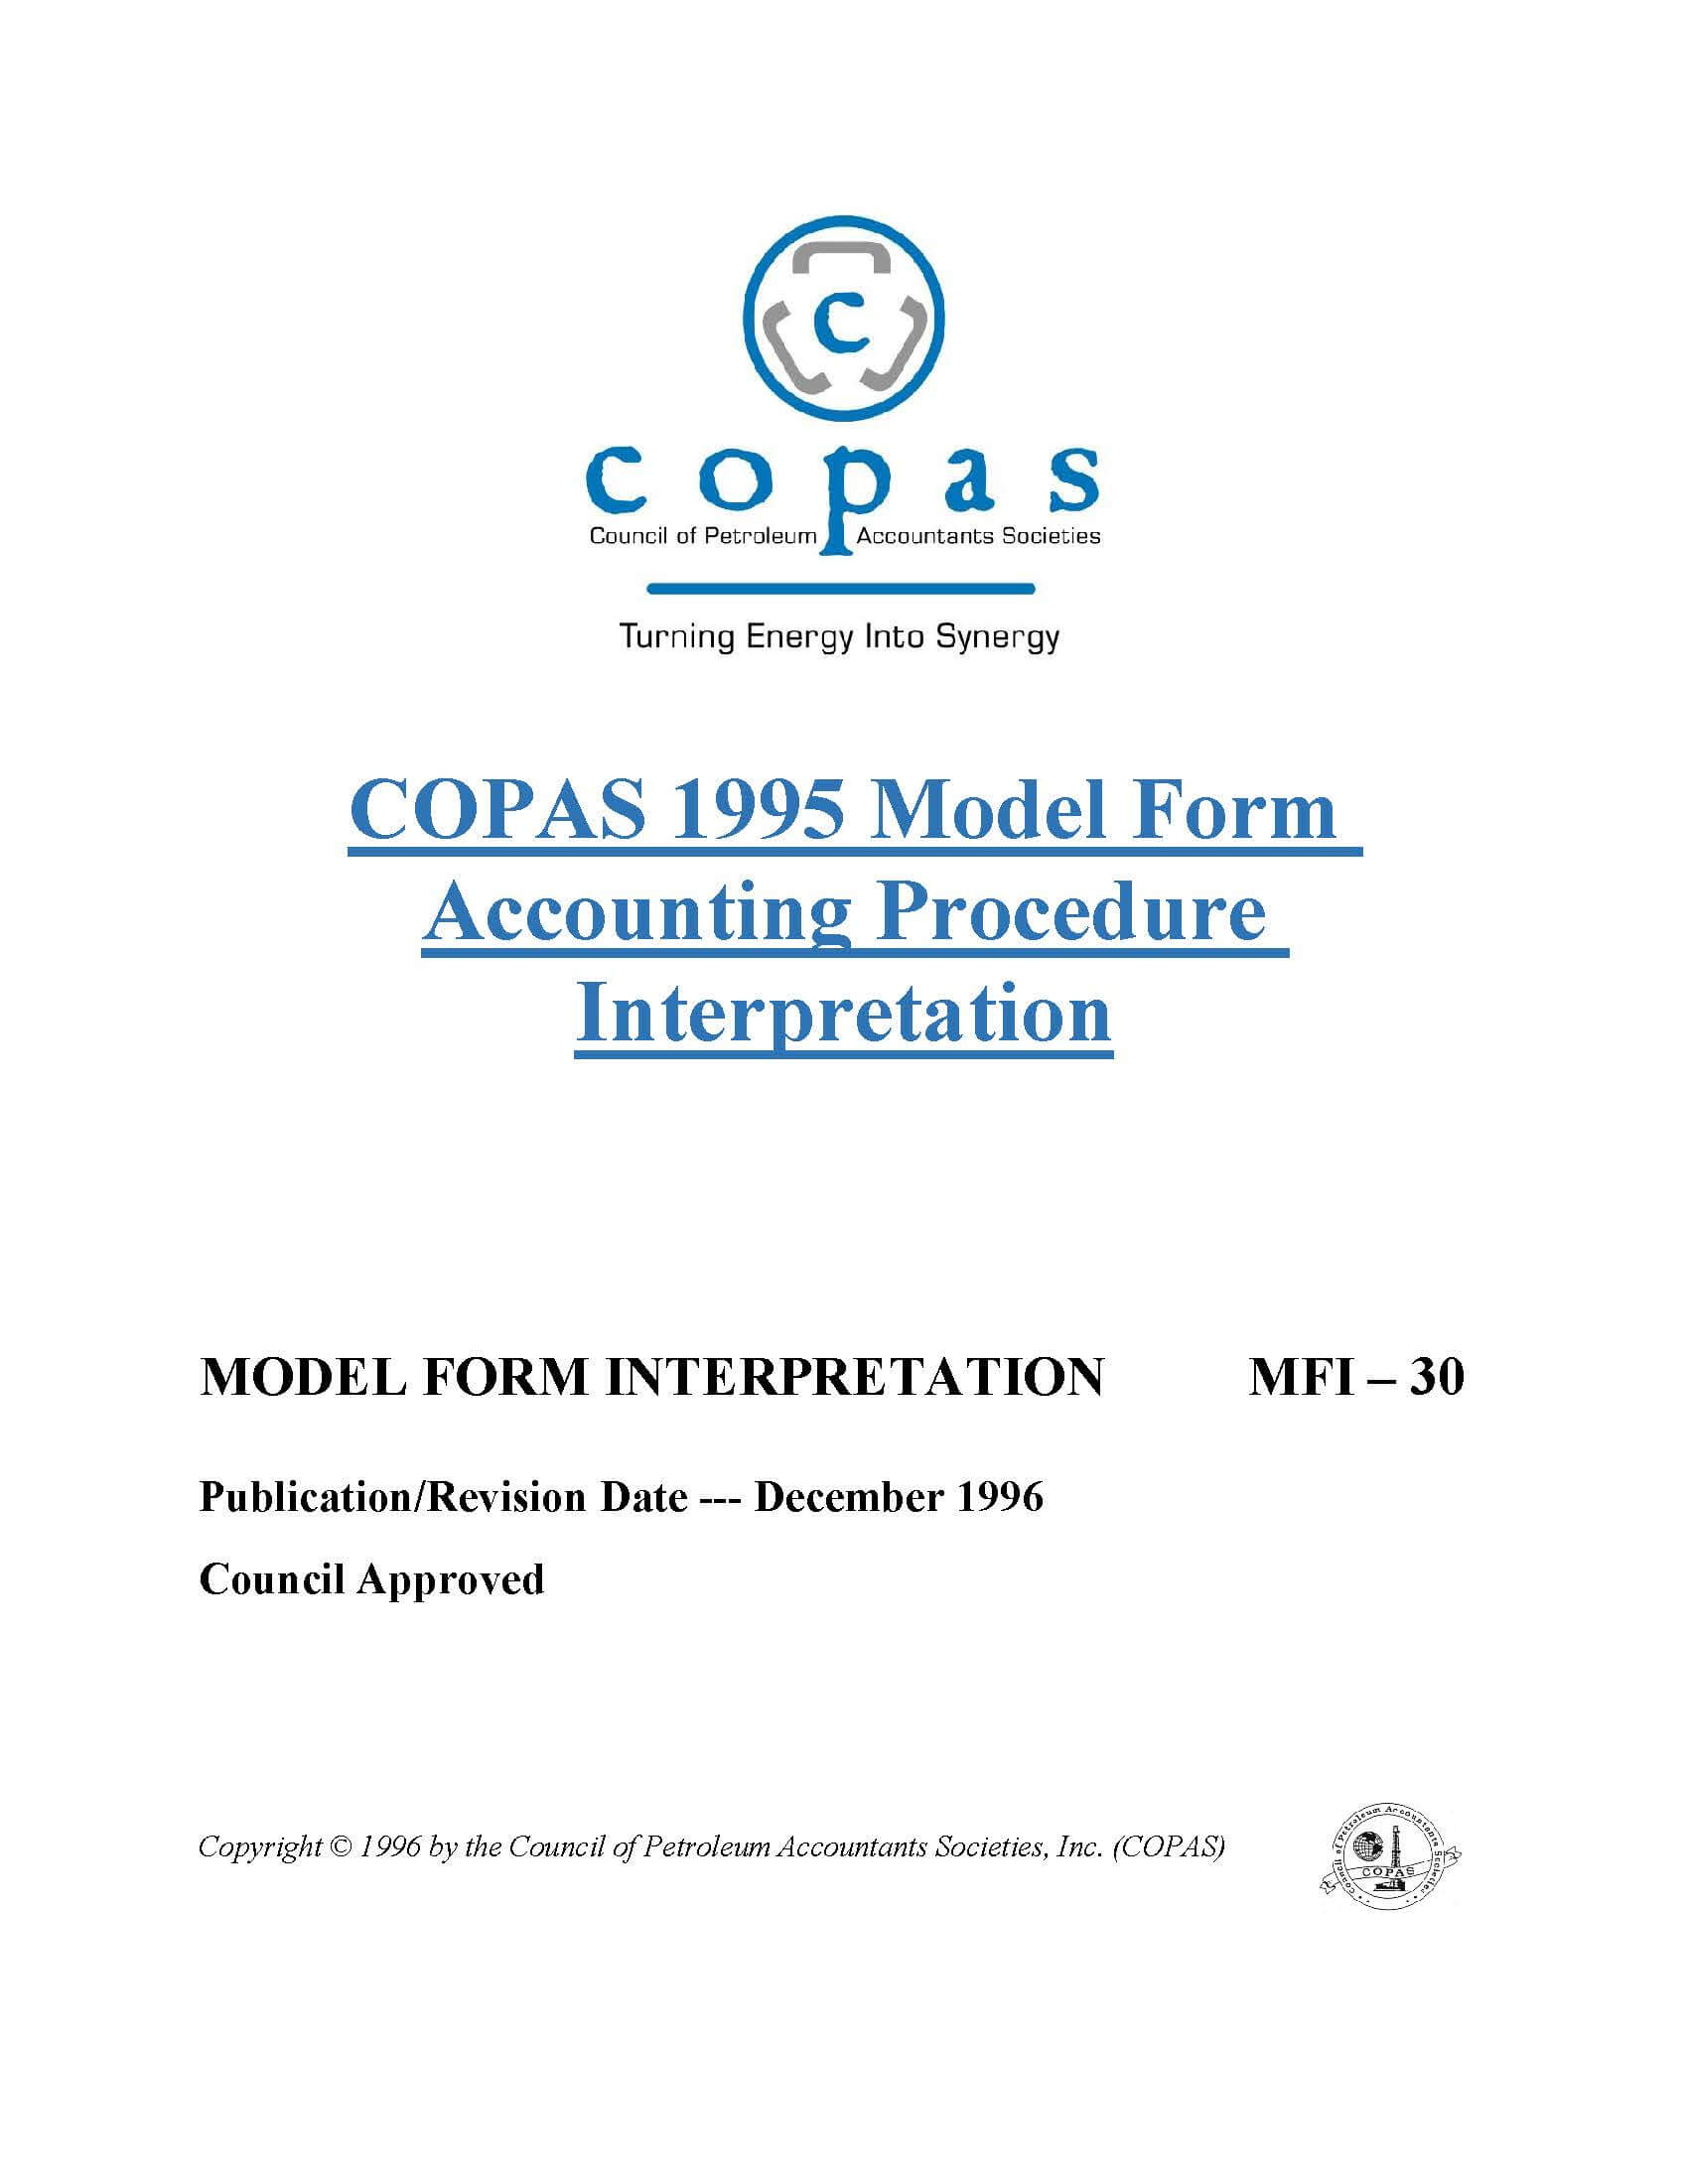 MFI-30 1995 Model Form Accounting Procedure Interpretation